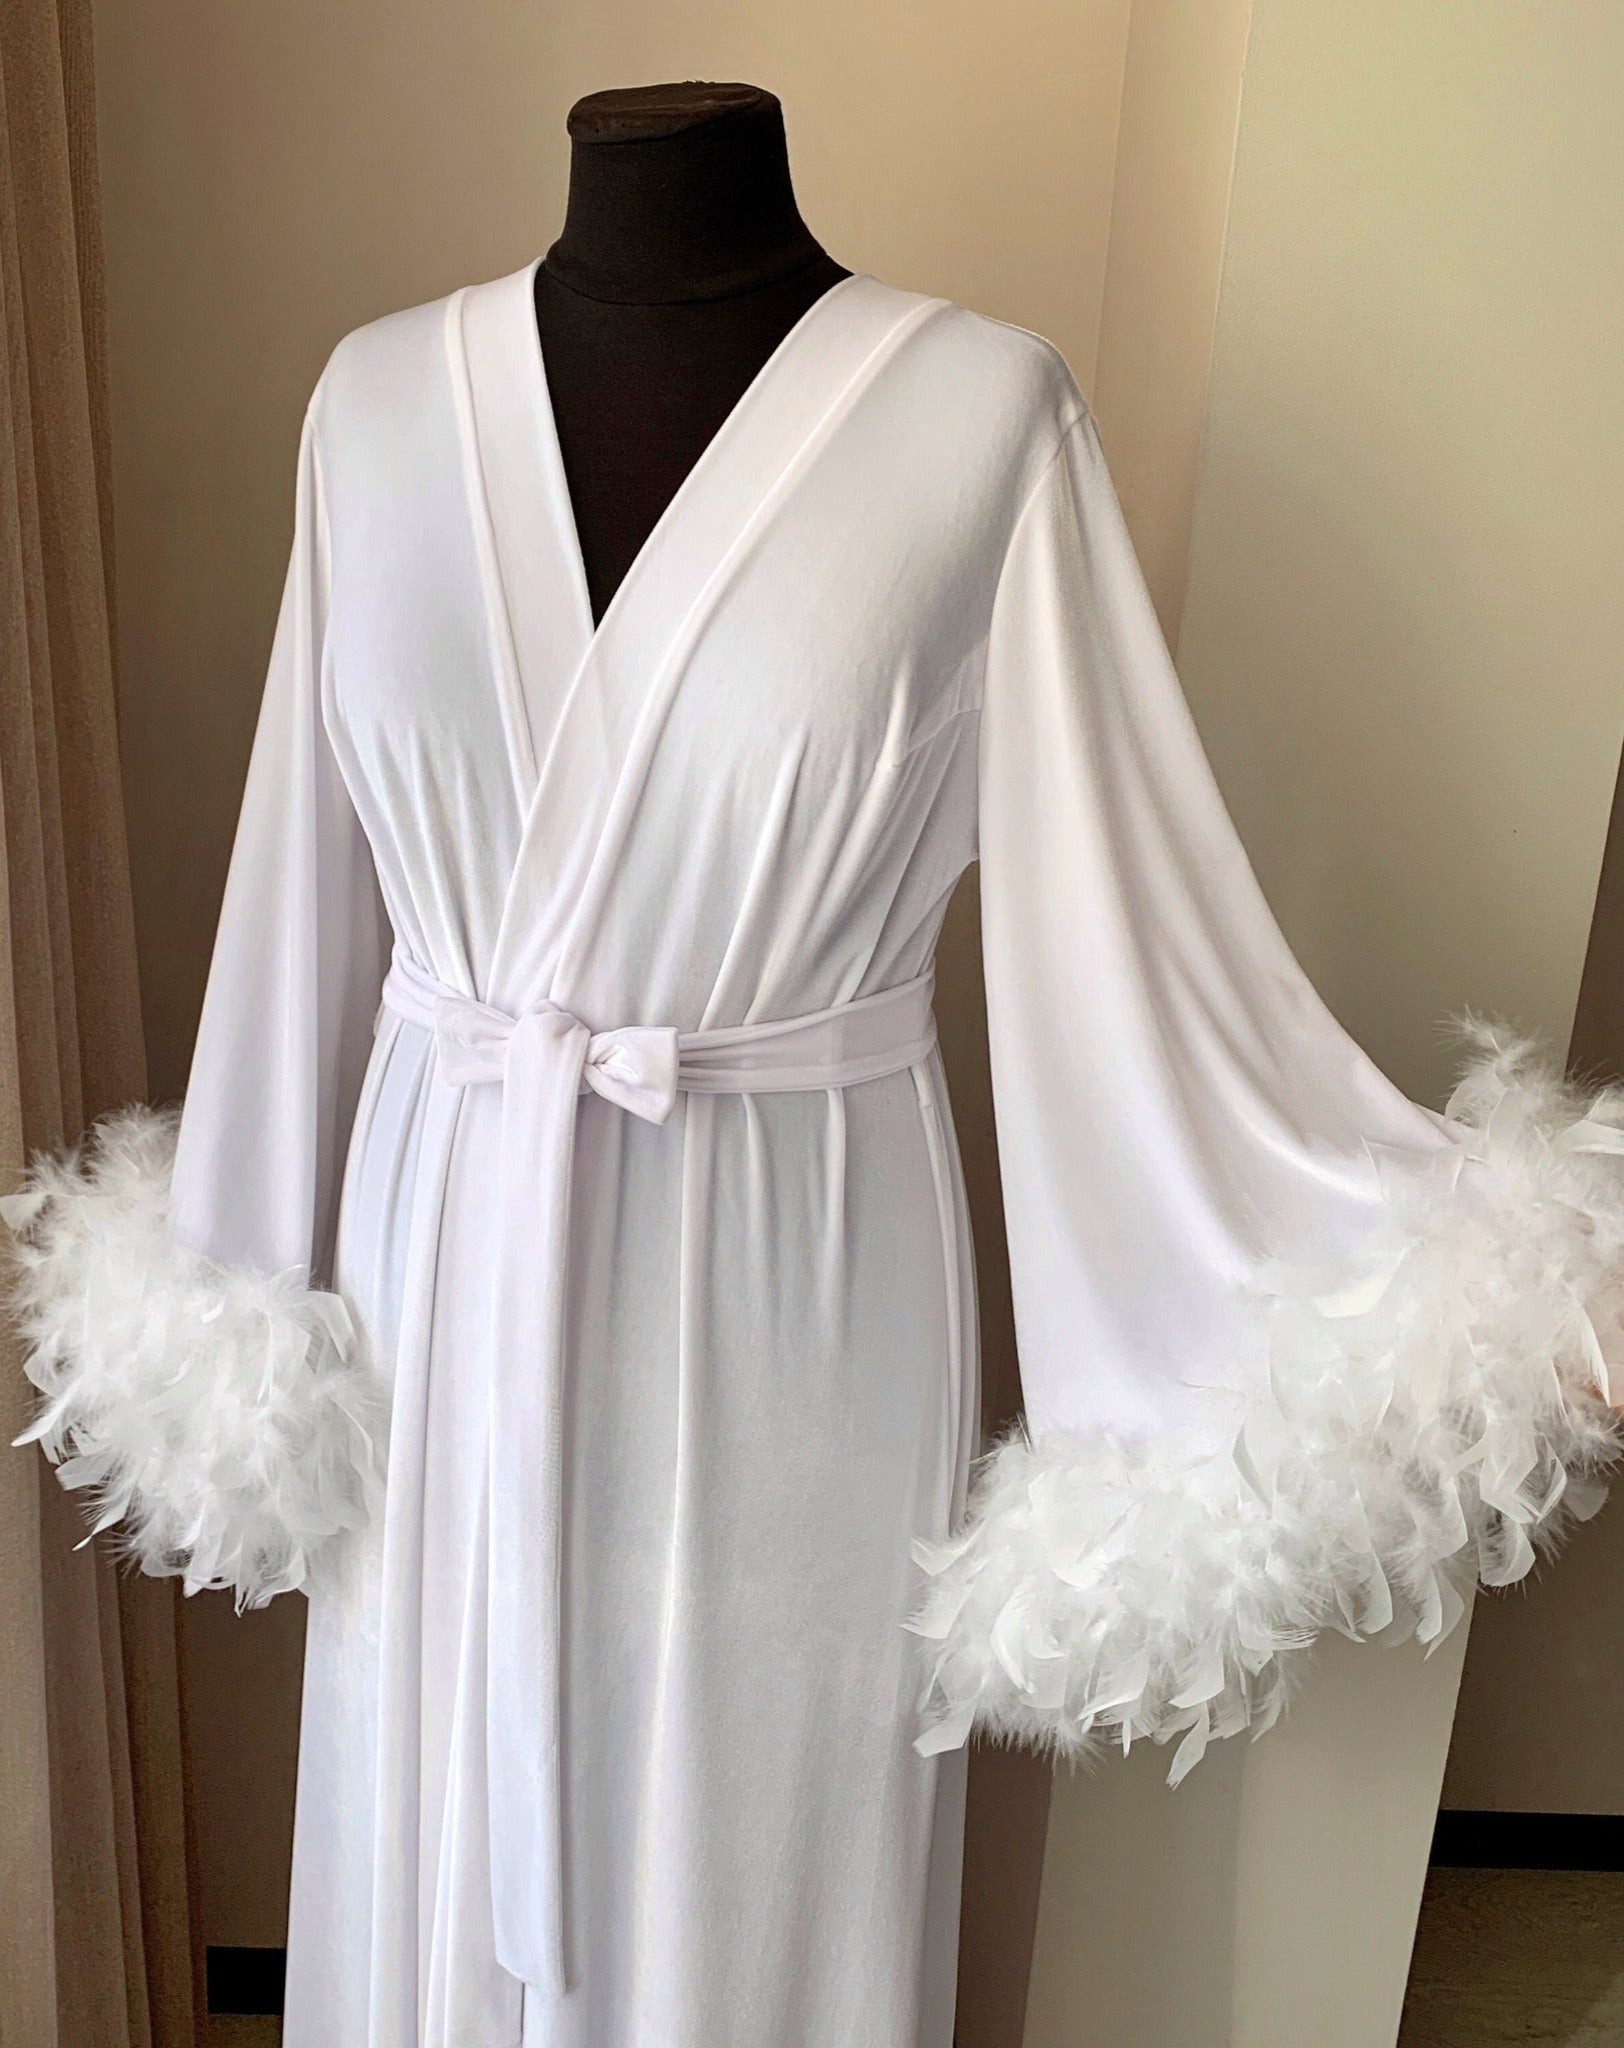 Velvet robe with feathers